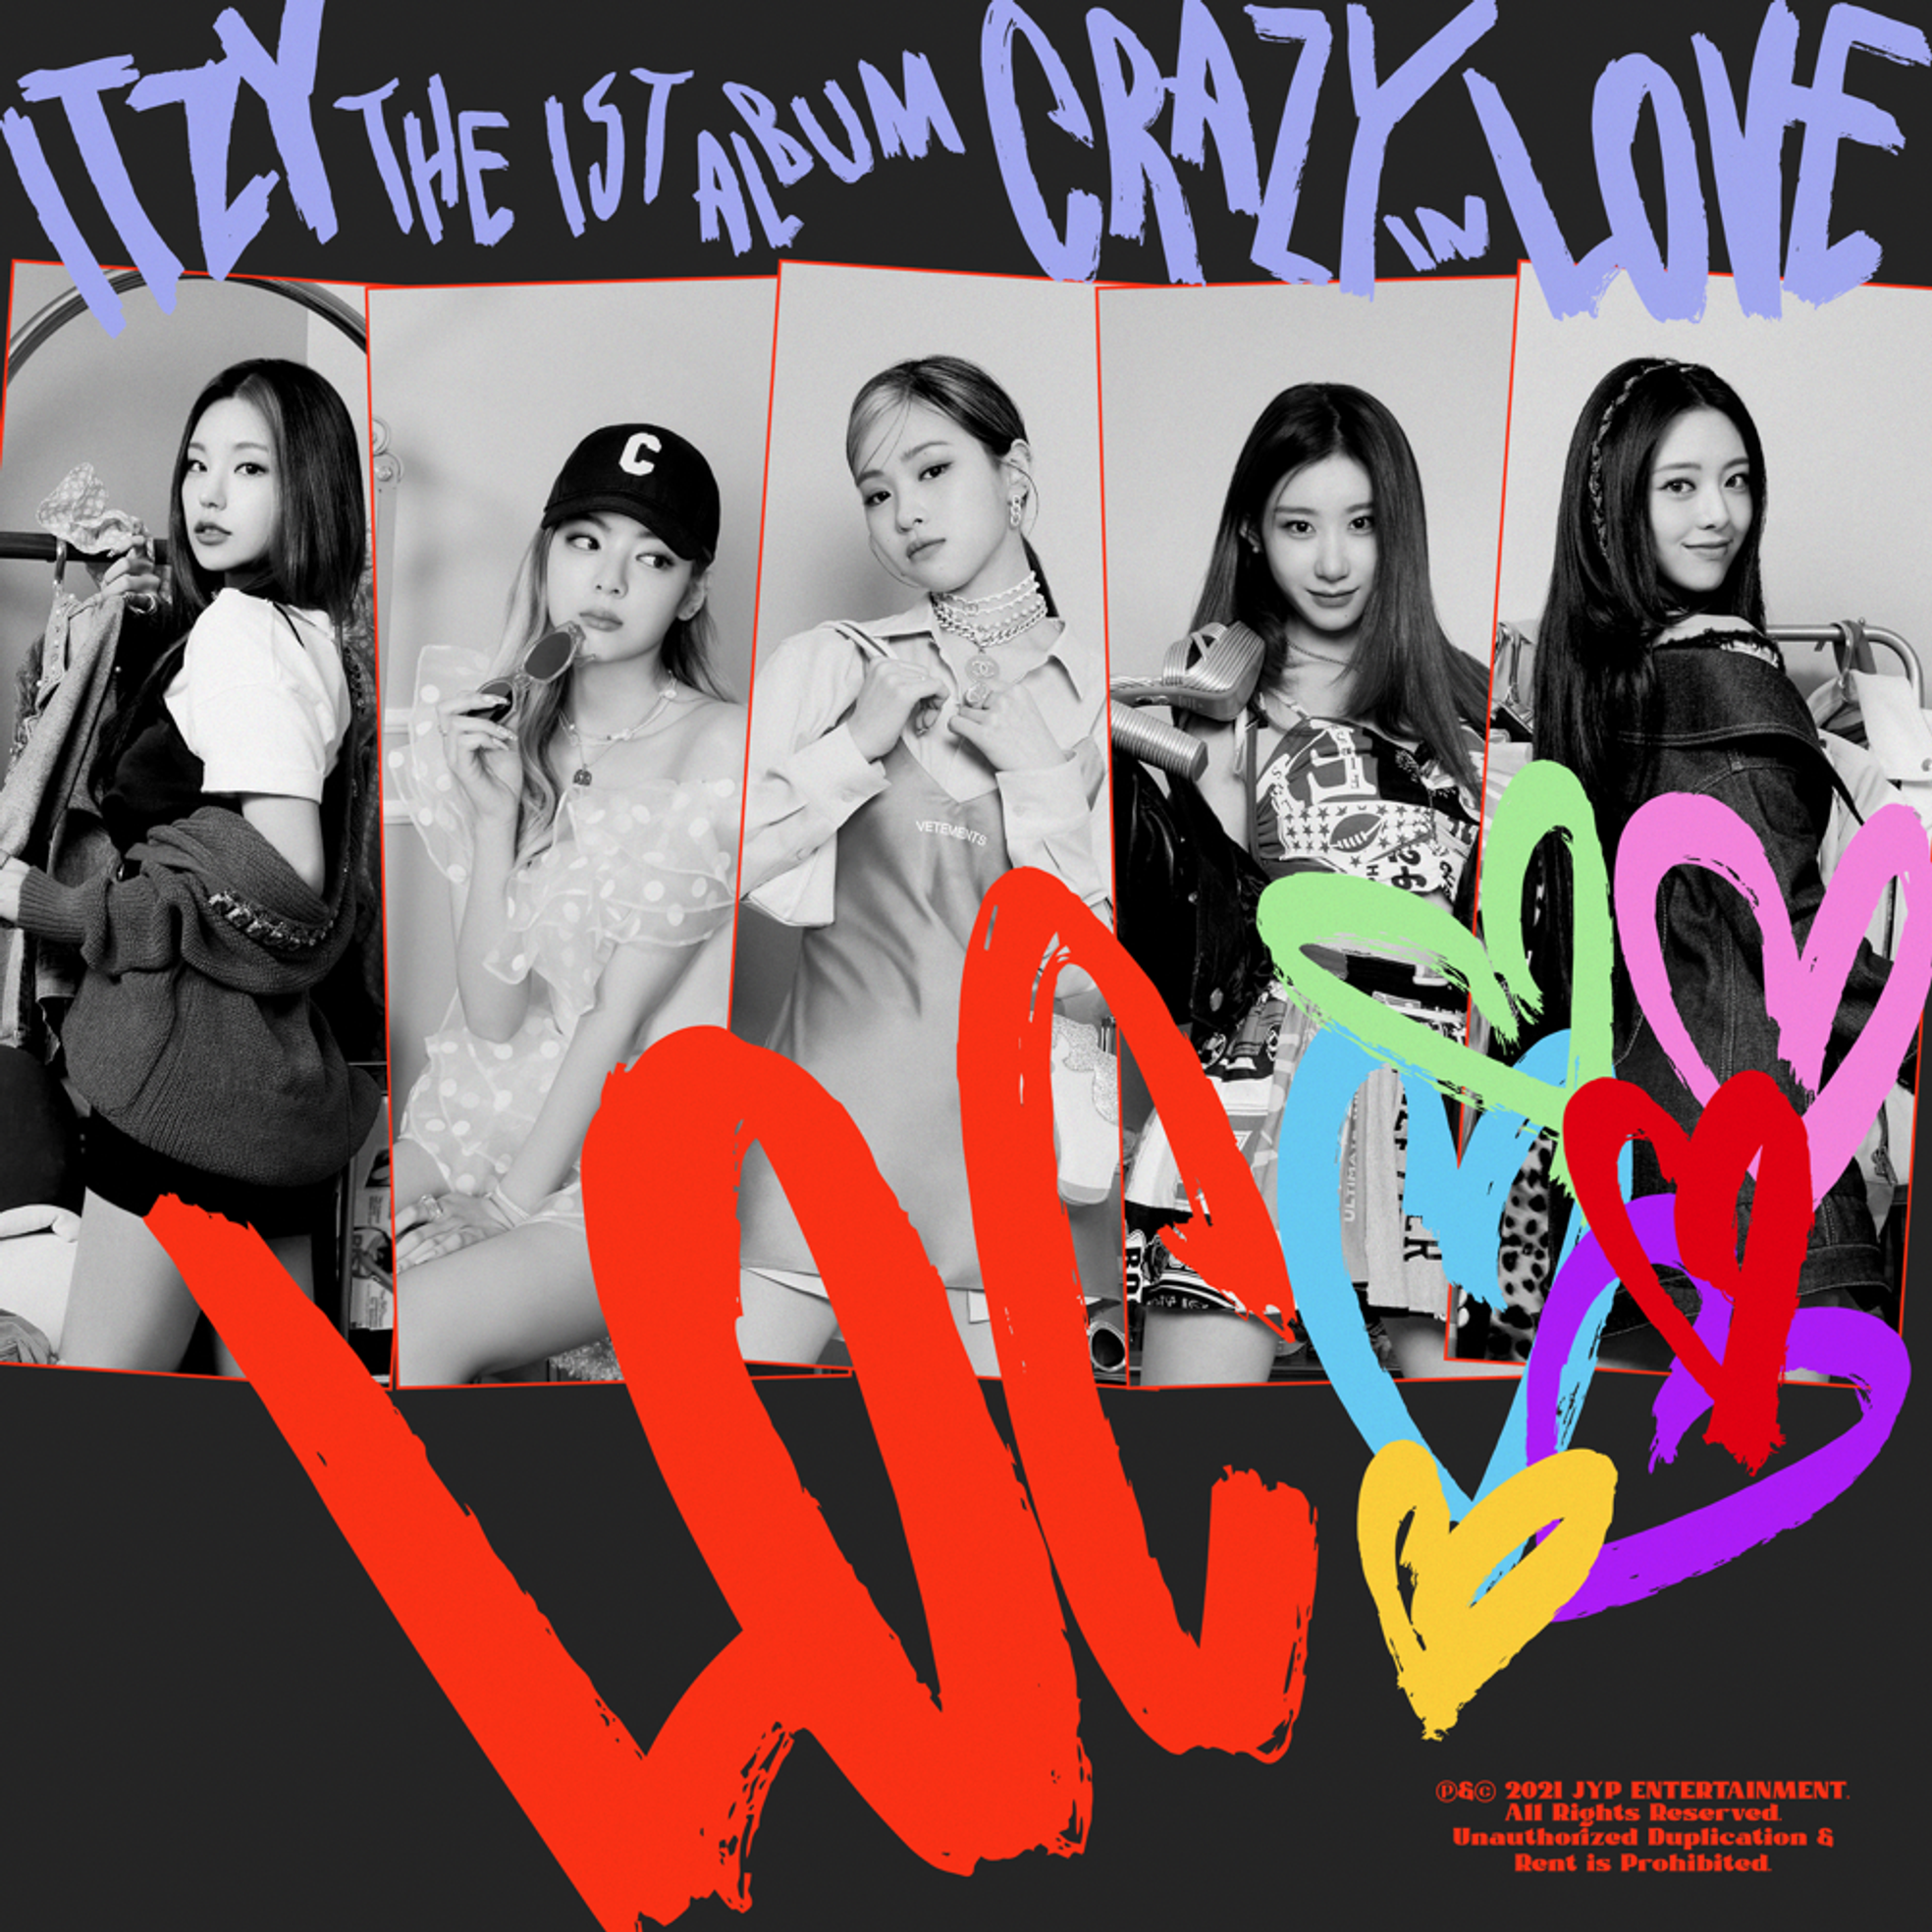 ITZY - [CRAZY IN LOVE] 1st Album 6 Version SET